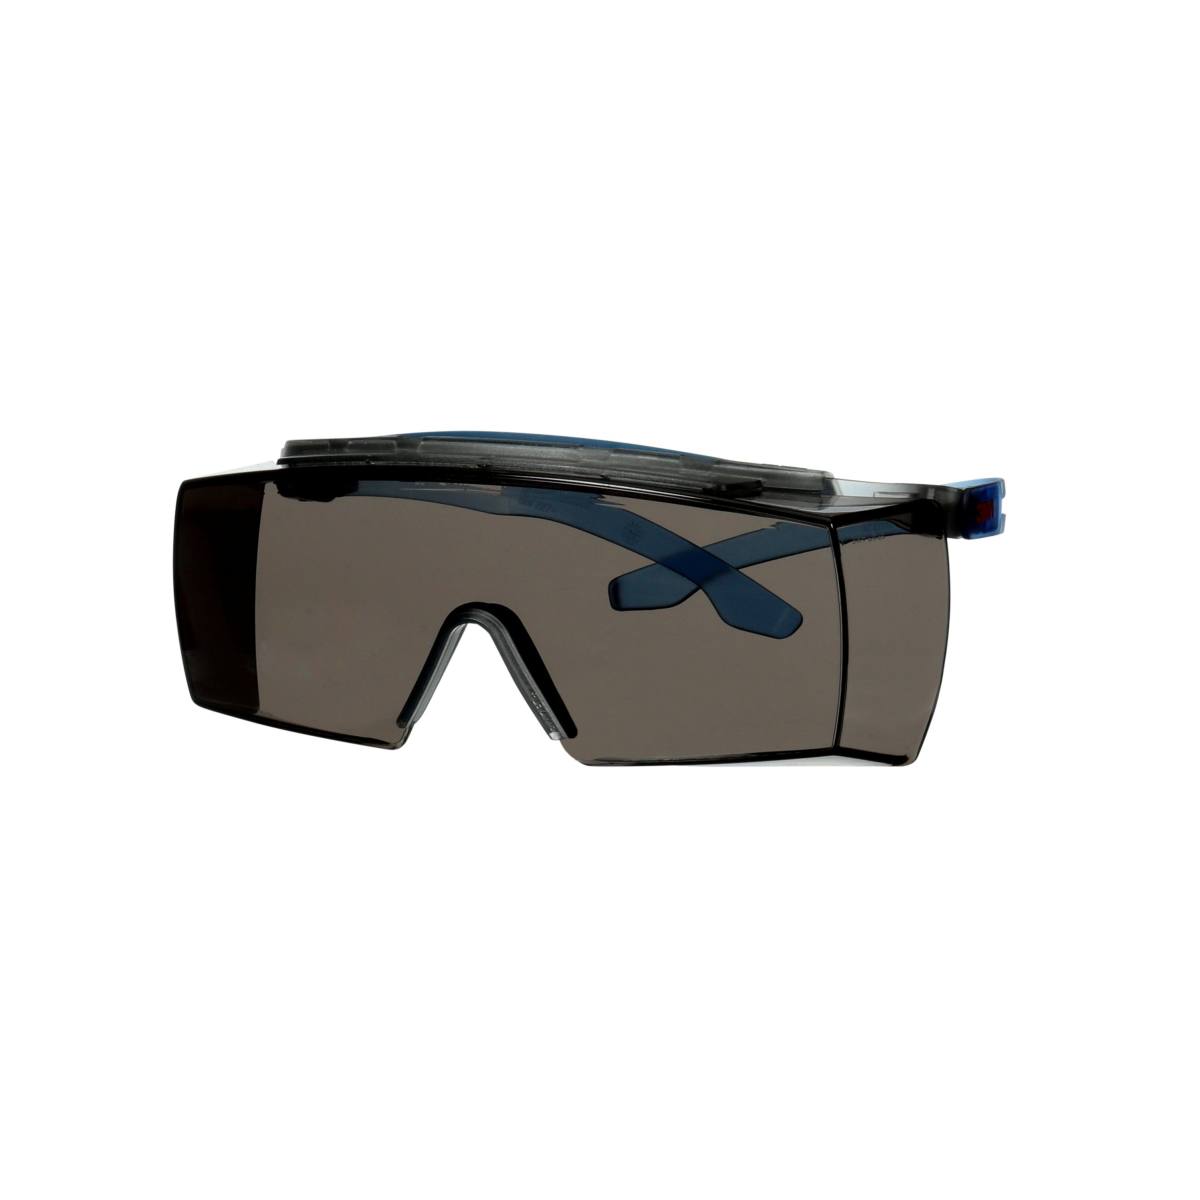 3M SecureFit 3700 over spectacles, blue temples, integrated eyebrow protection, Scotchgard anti-fog coating (K&amp;N), grey lens, angle-adjustable, SF3702XSGAF-BLU-EU